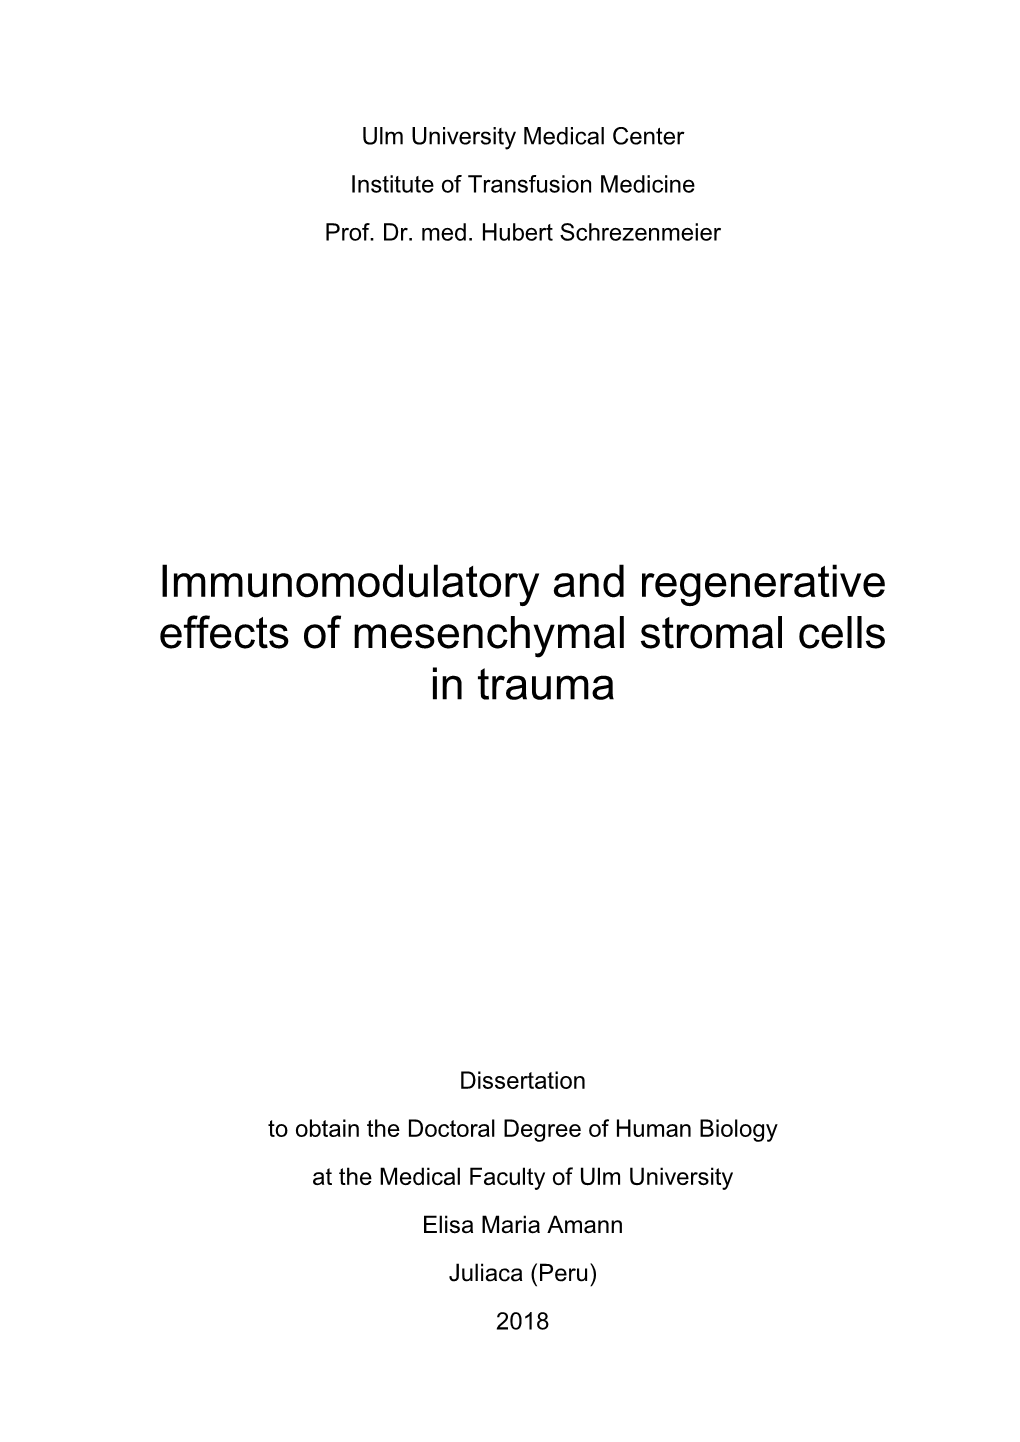 Immunomodulatory and Regenerative Effects of Mesenchymal Stromal Cells in Trauma